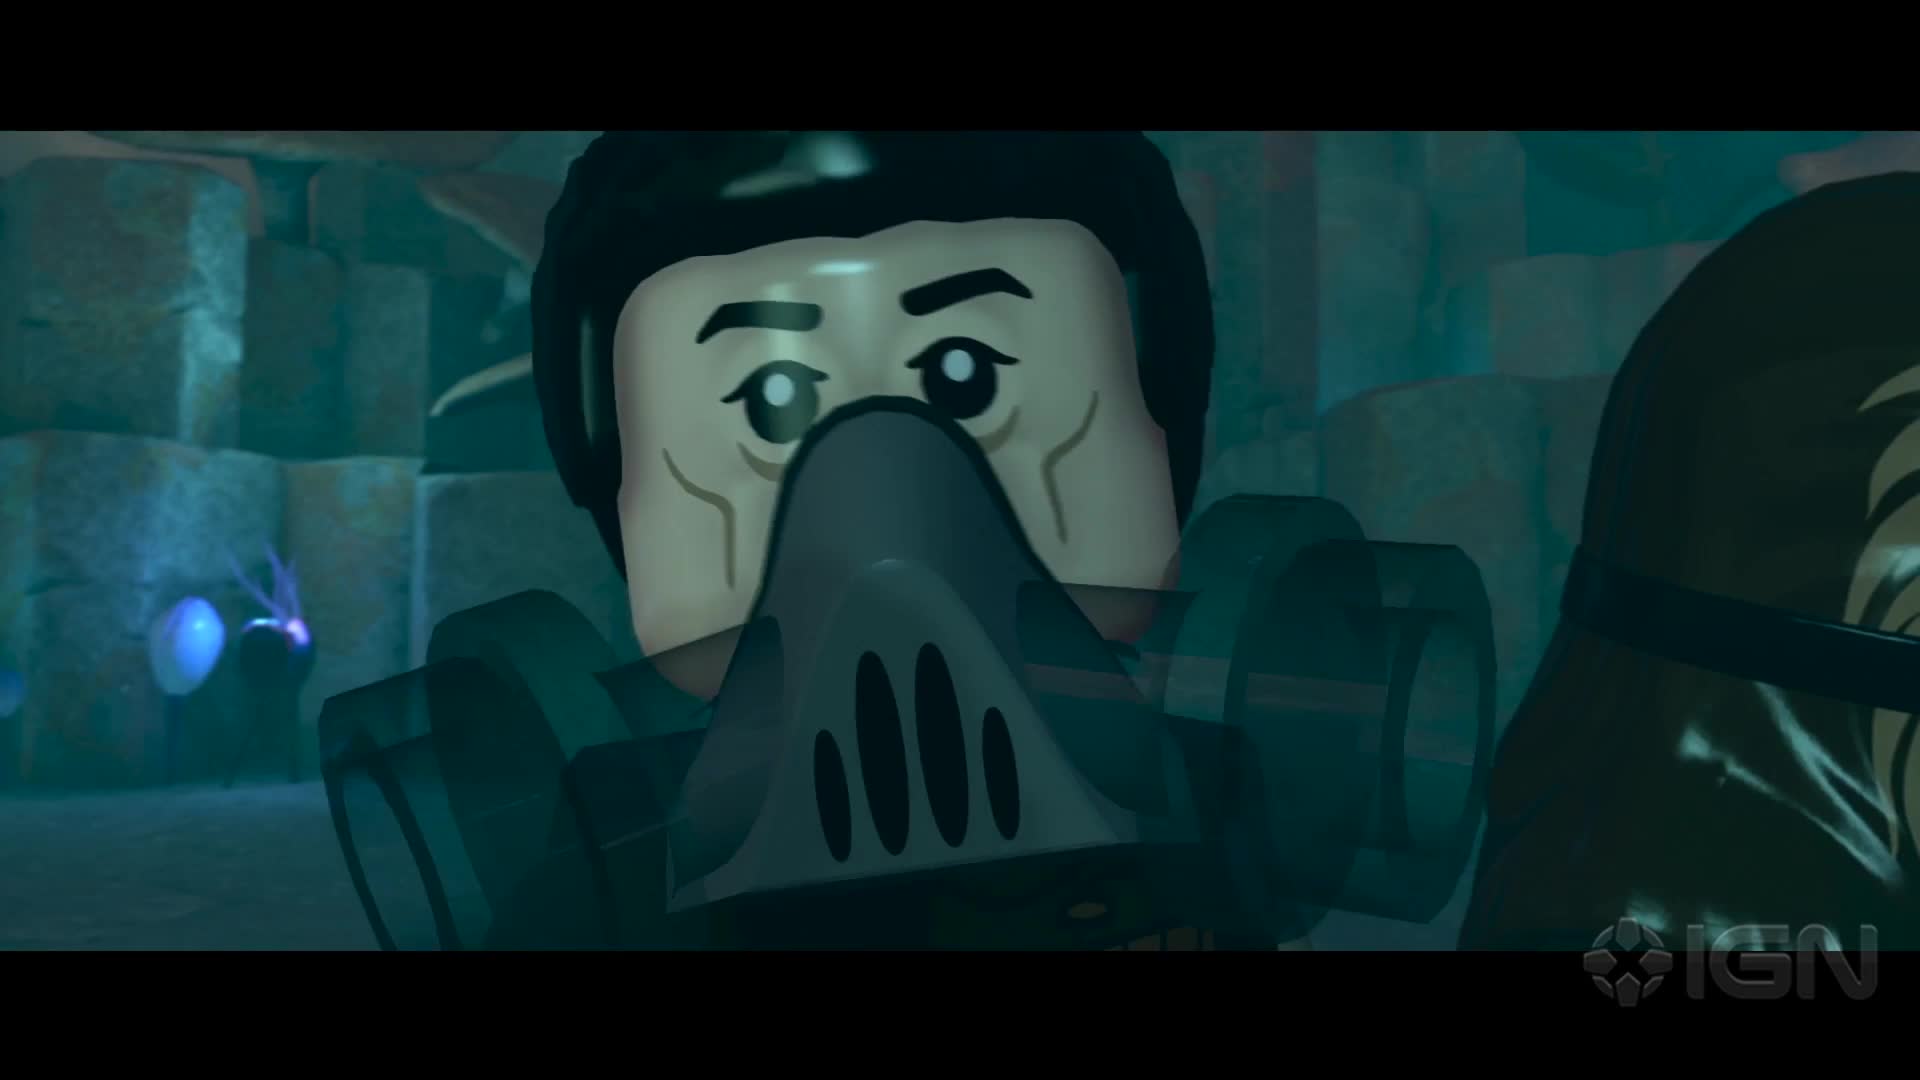 LEGO Star Wars: The Force Awakens - trailer